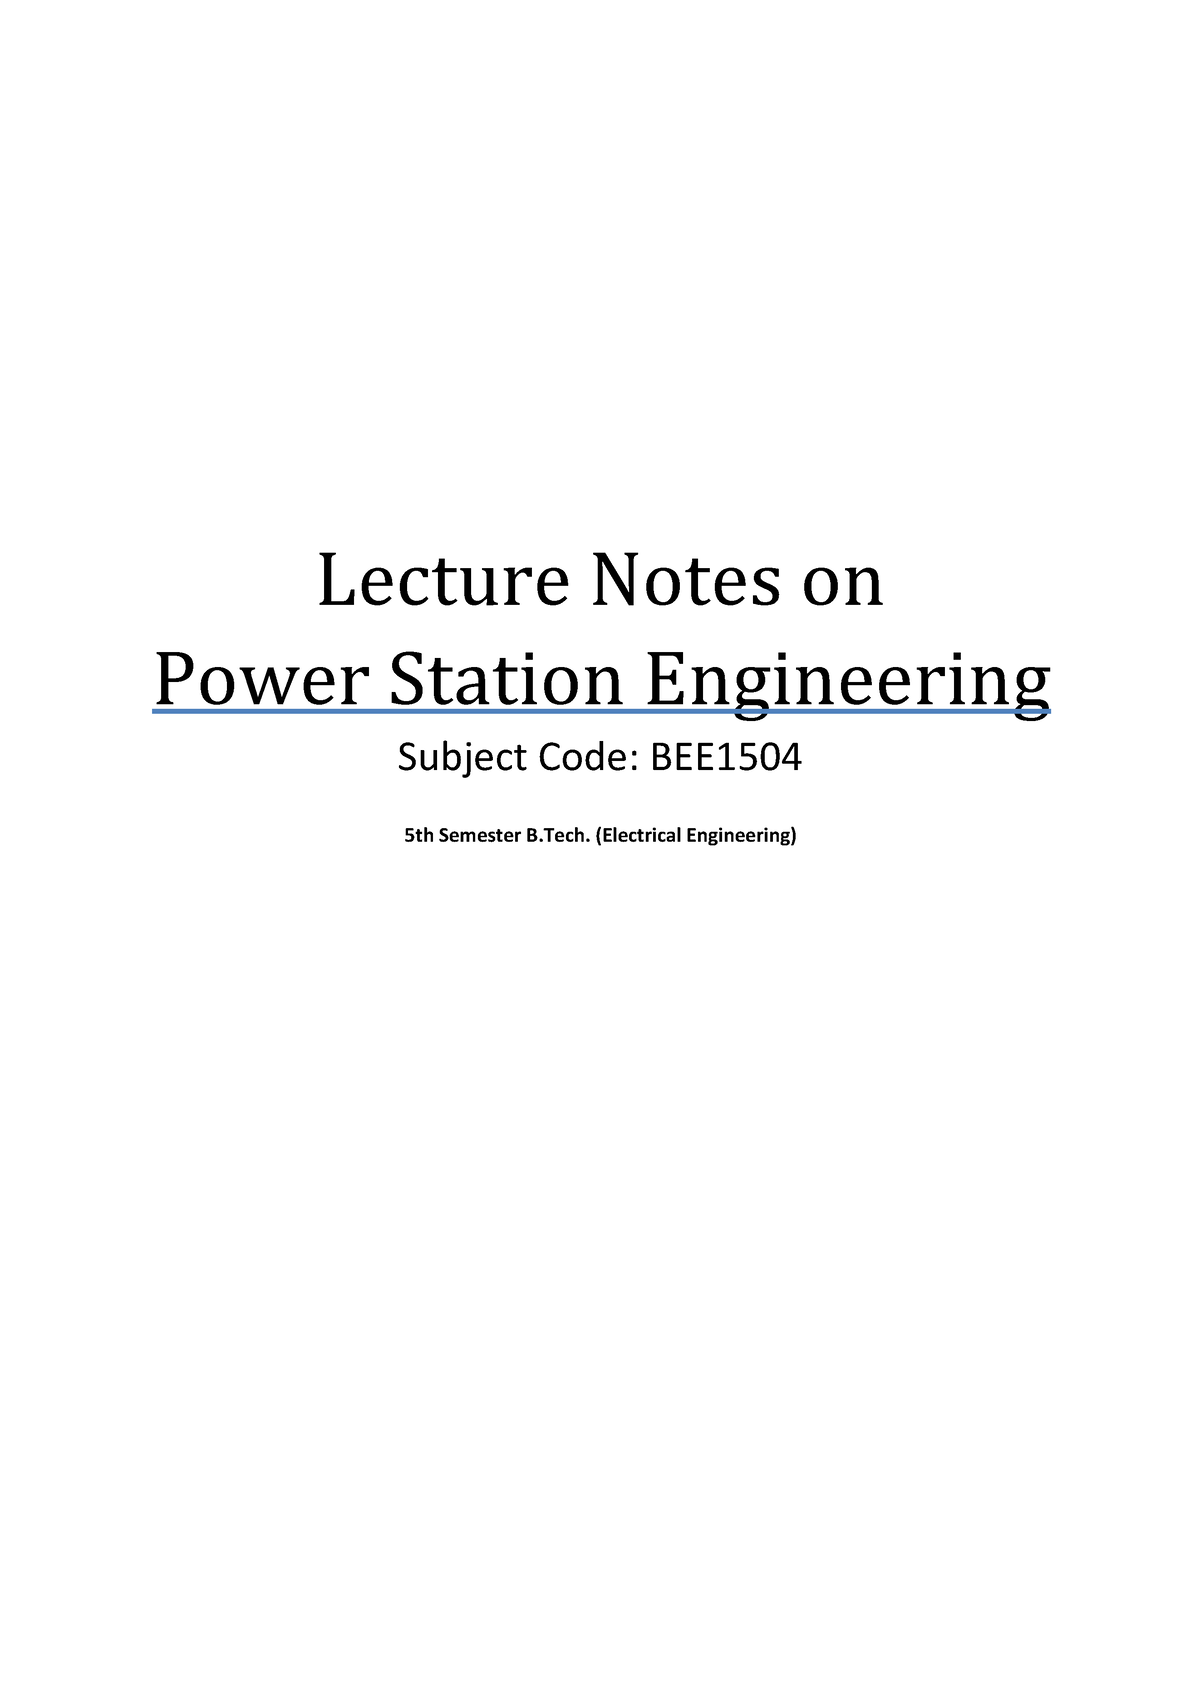 essay on power station